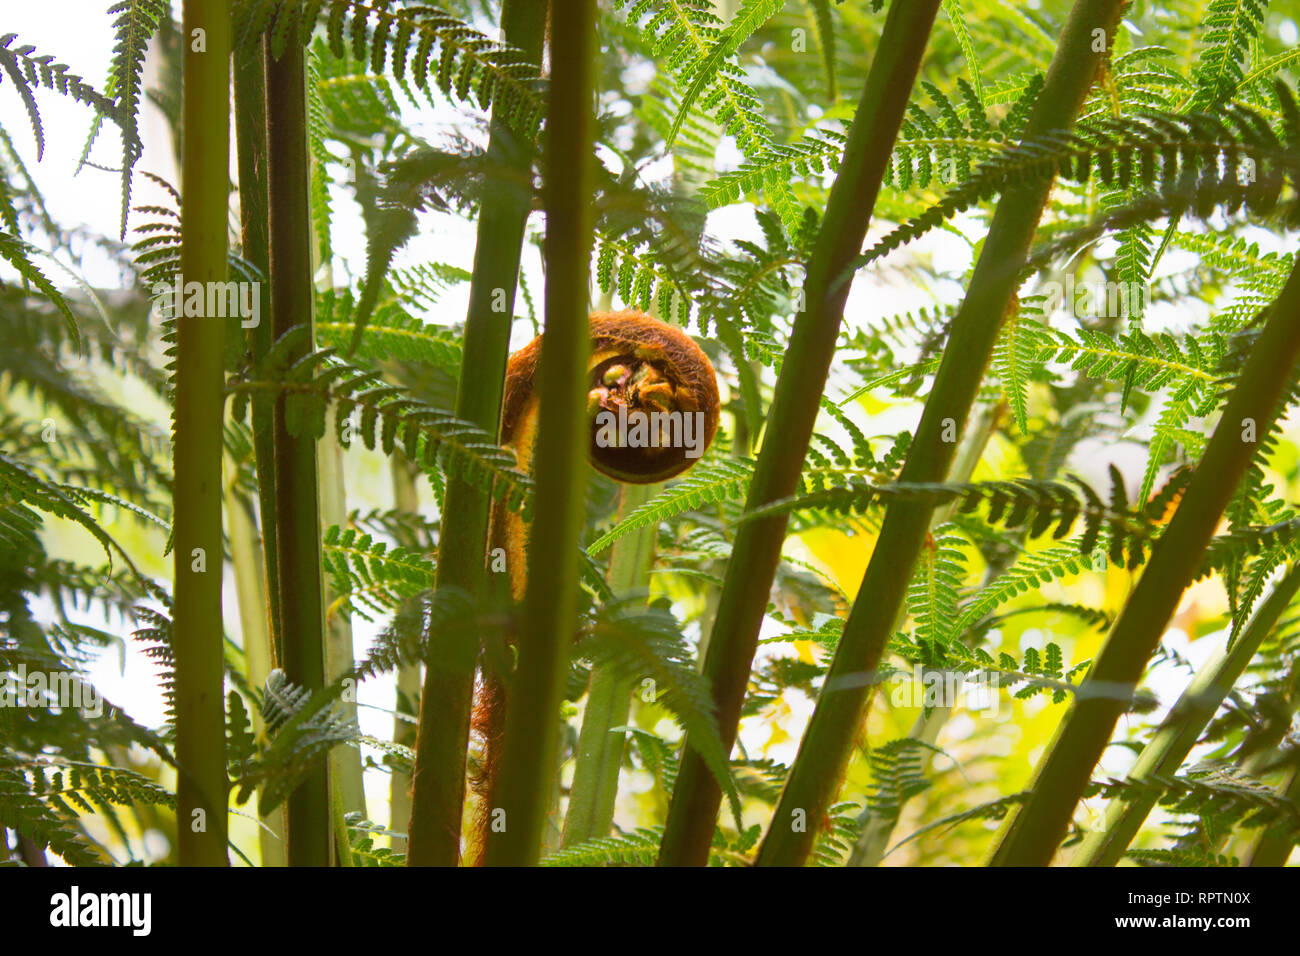 tropical rainforest plants outdoor background lives flora travel Stock Photo